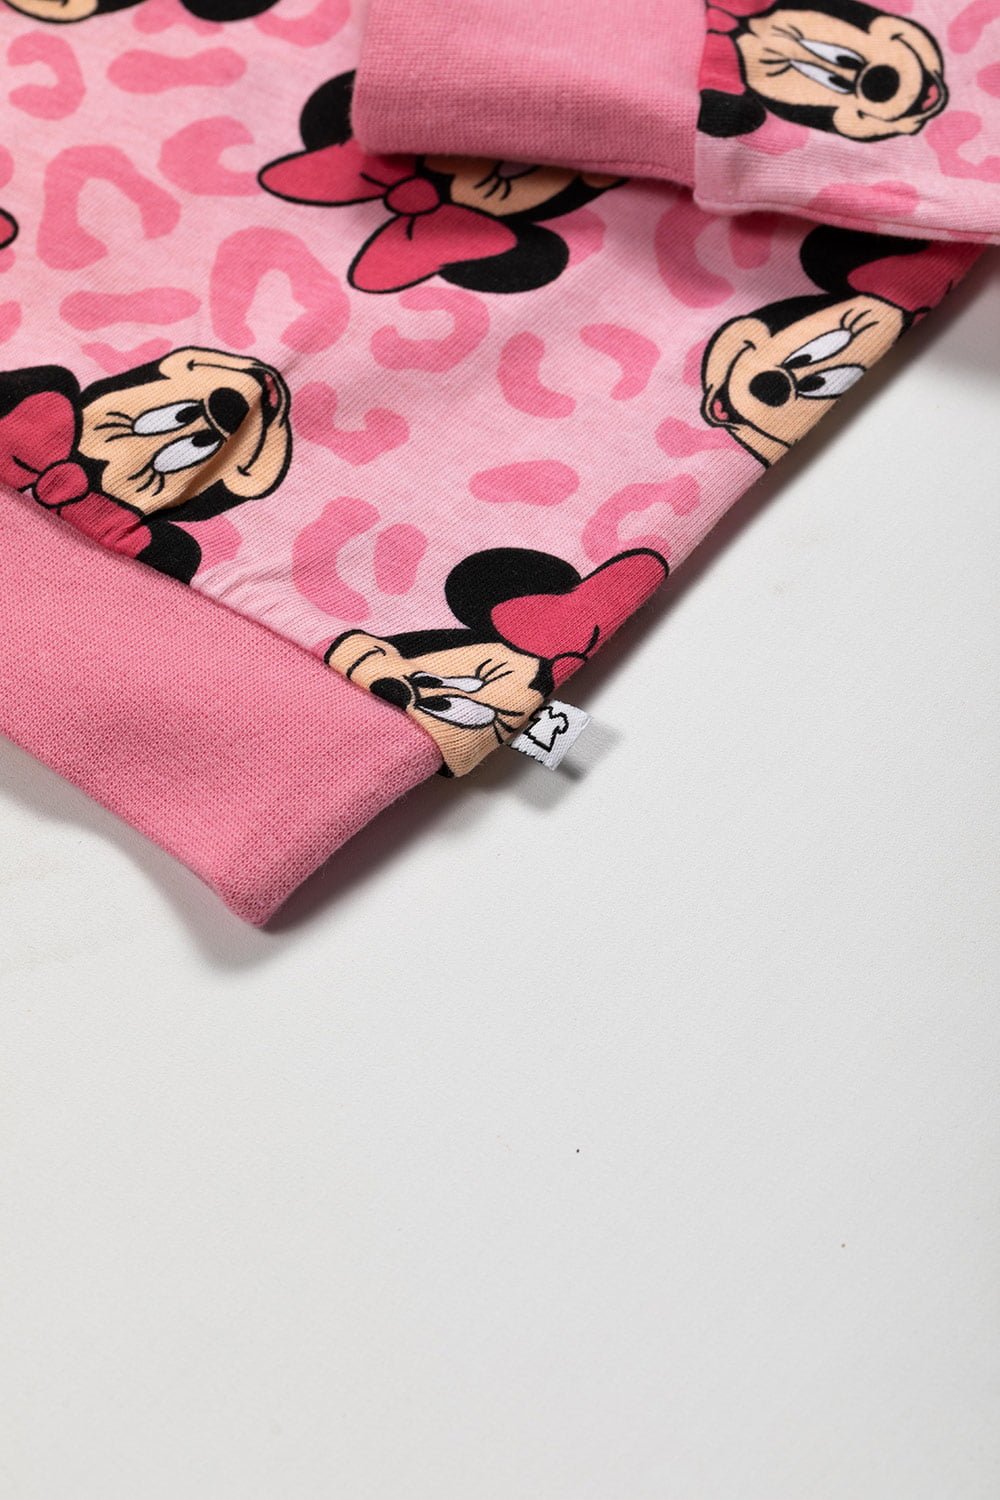 Disney Minnie Mouse Girls Organic Cotton Pyjamas - Brand Threads